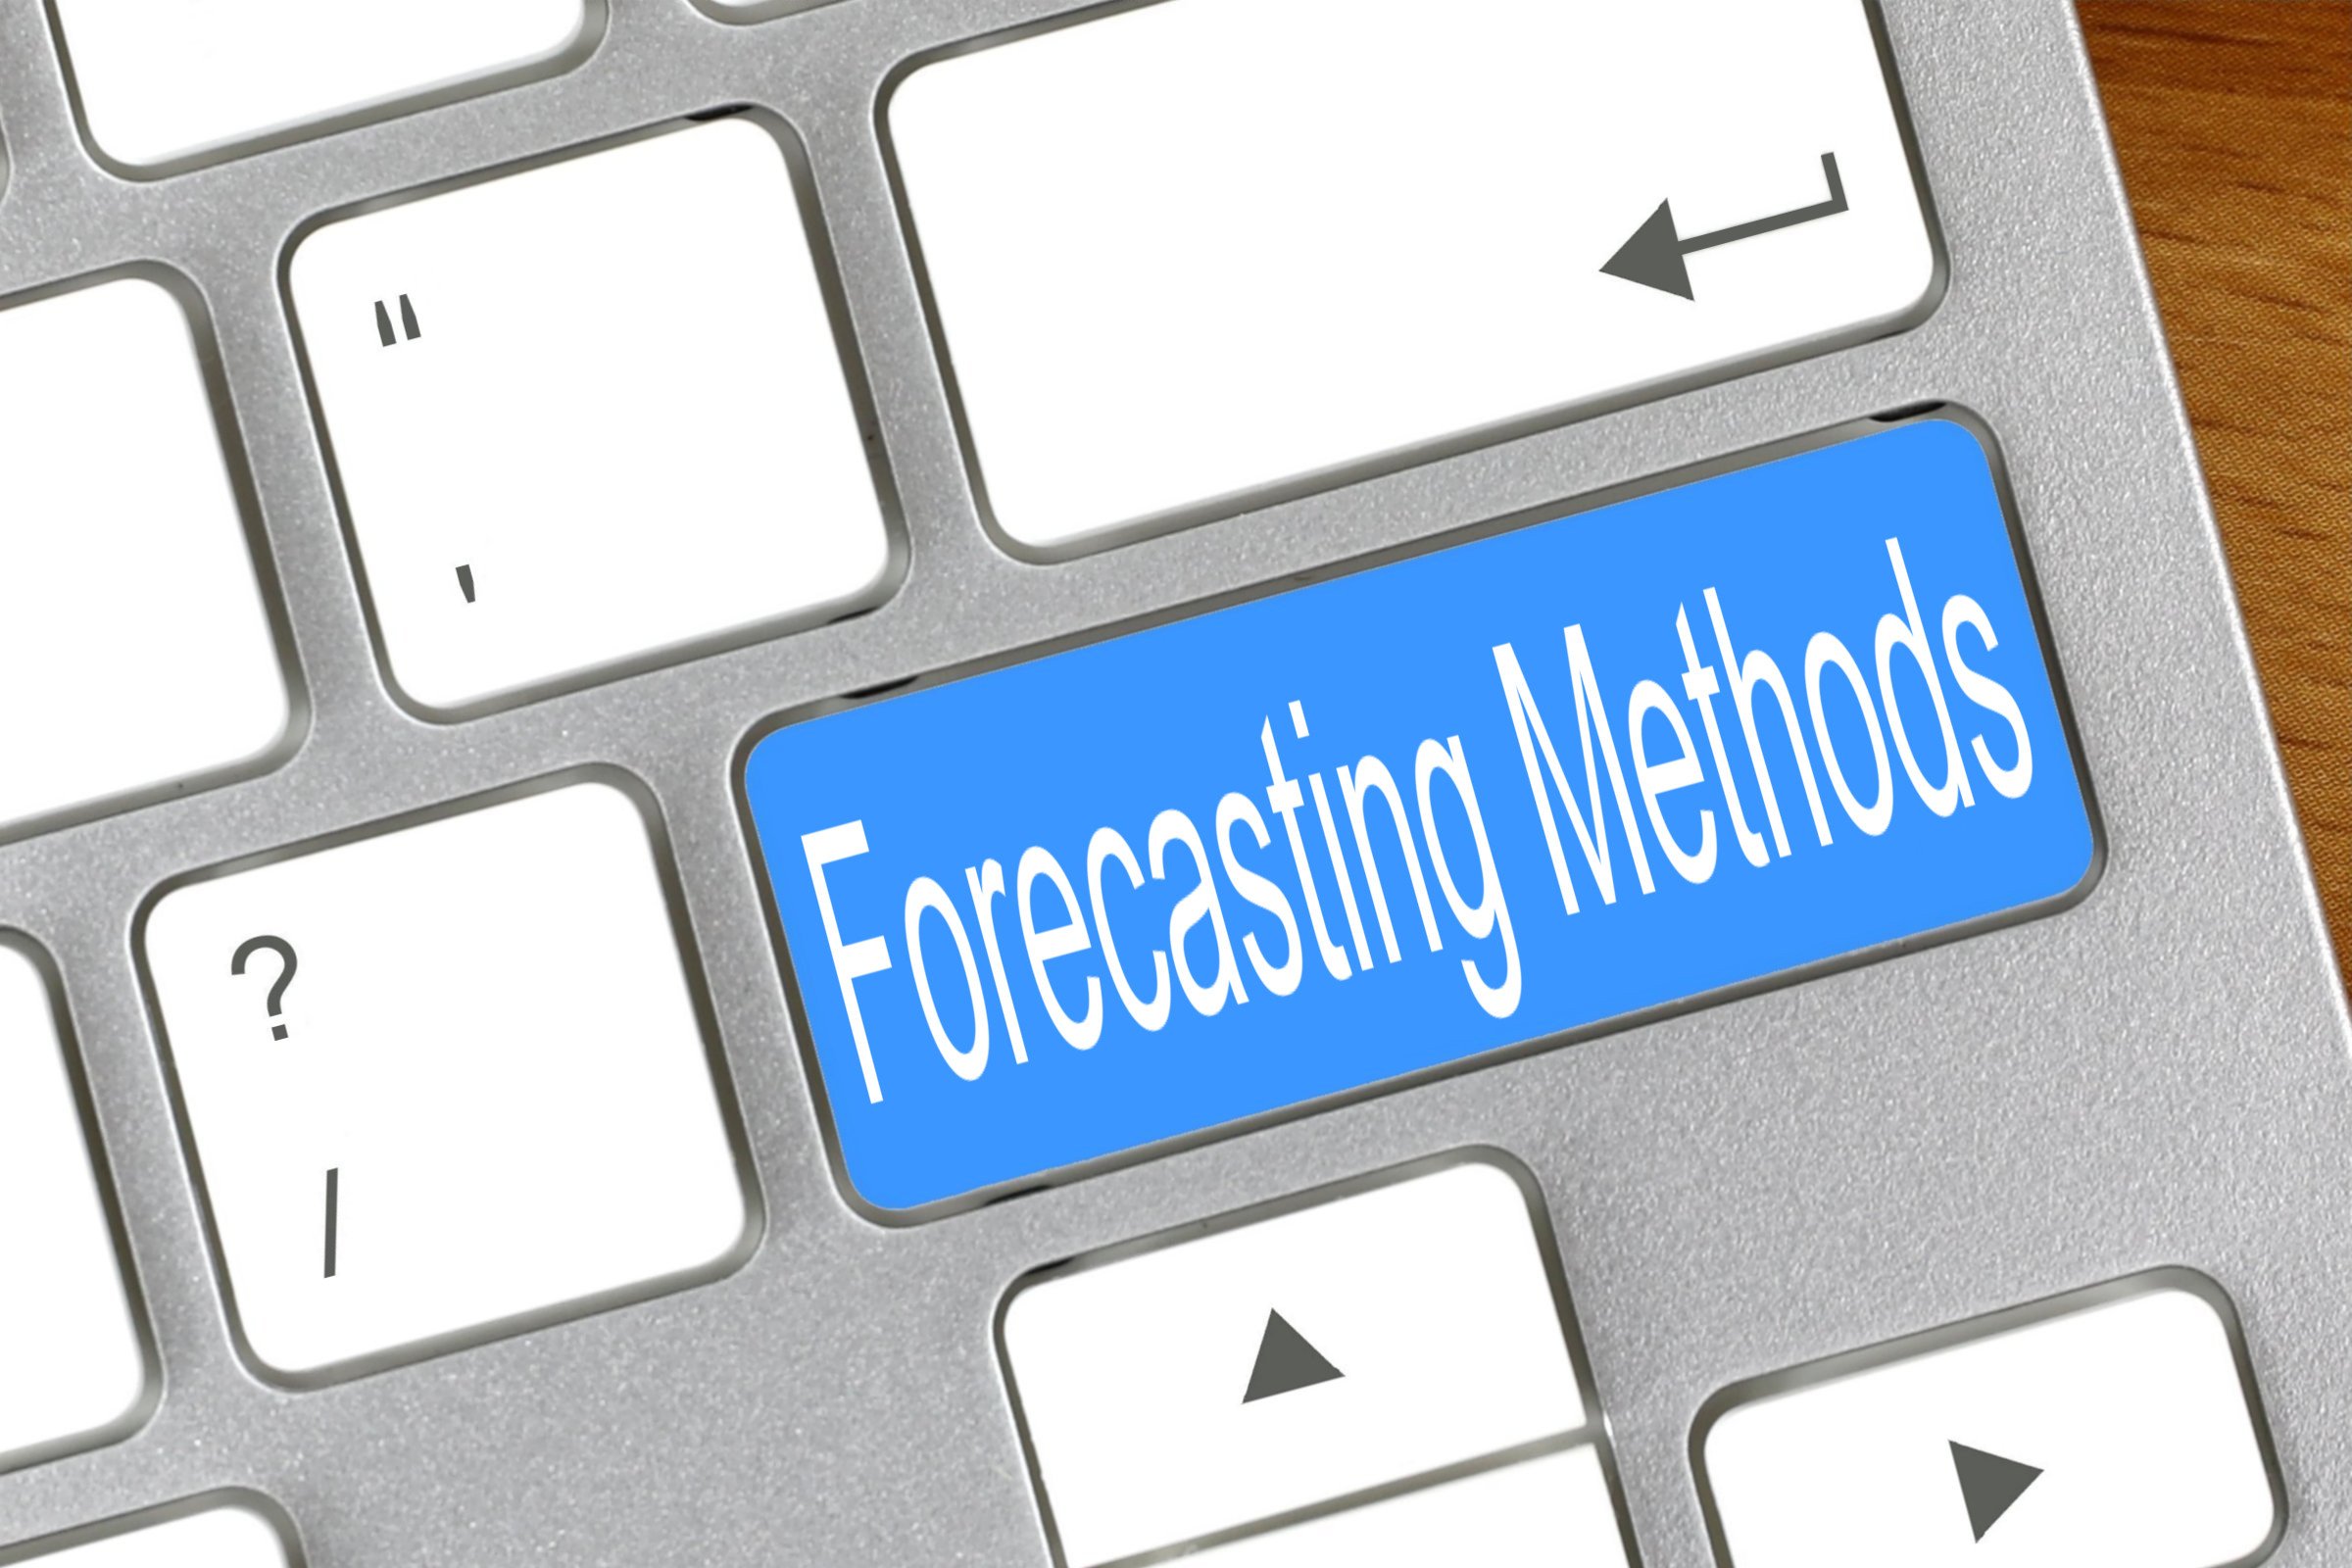 forecasting methods